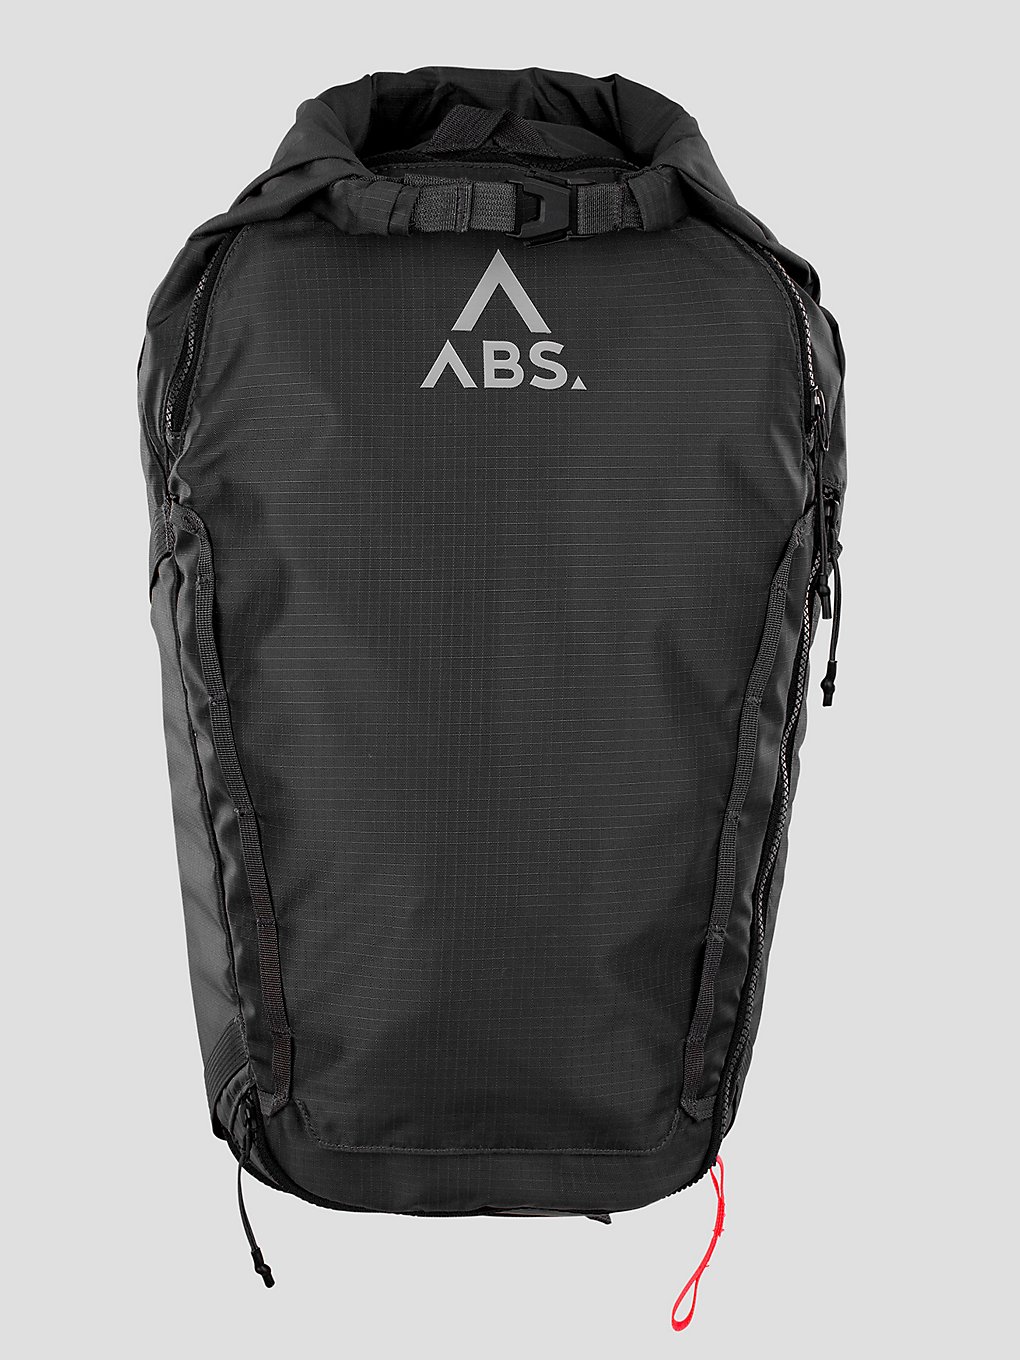 ABS A.Light Tour Zipon (35-40L) Rucksack dark slate kaufen